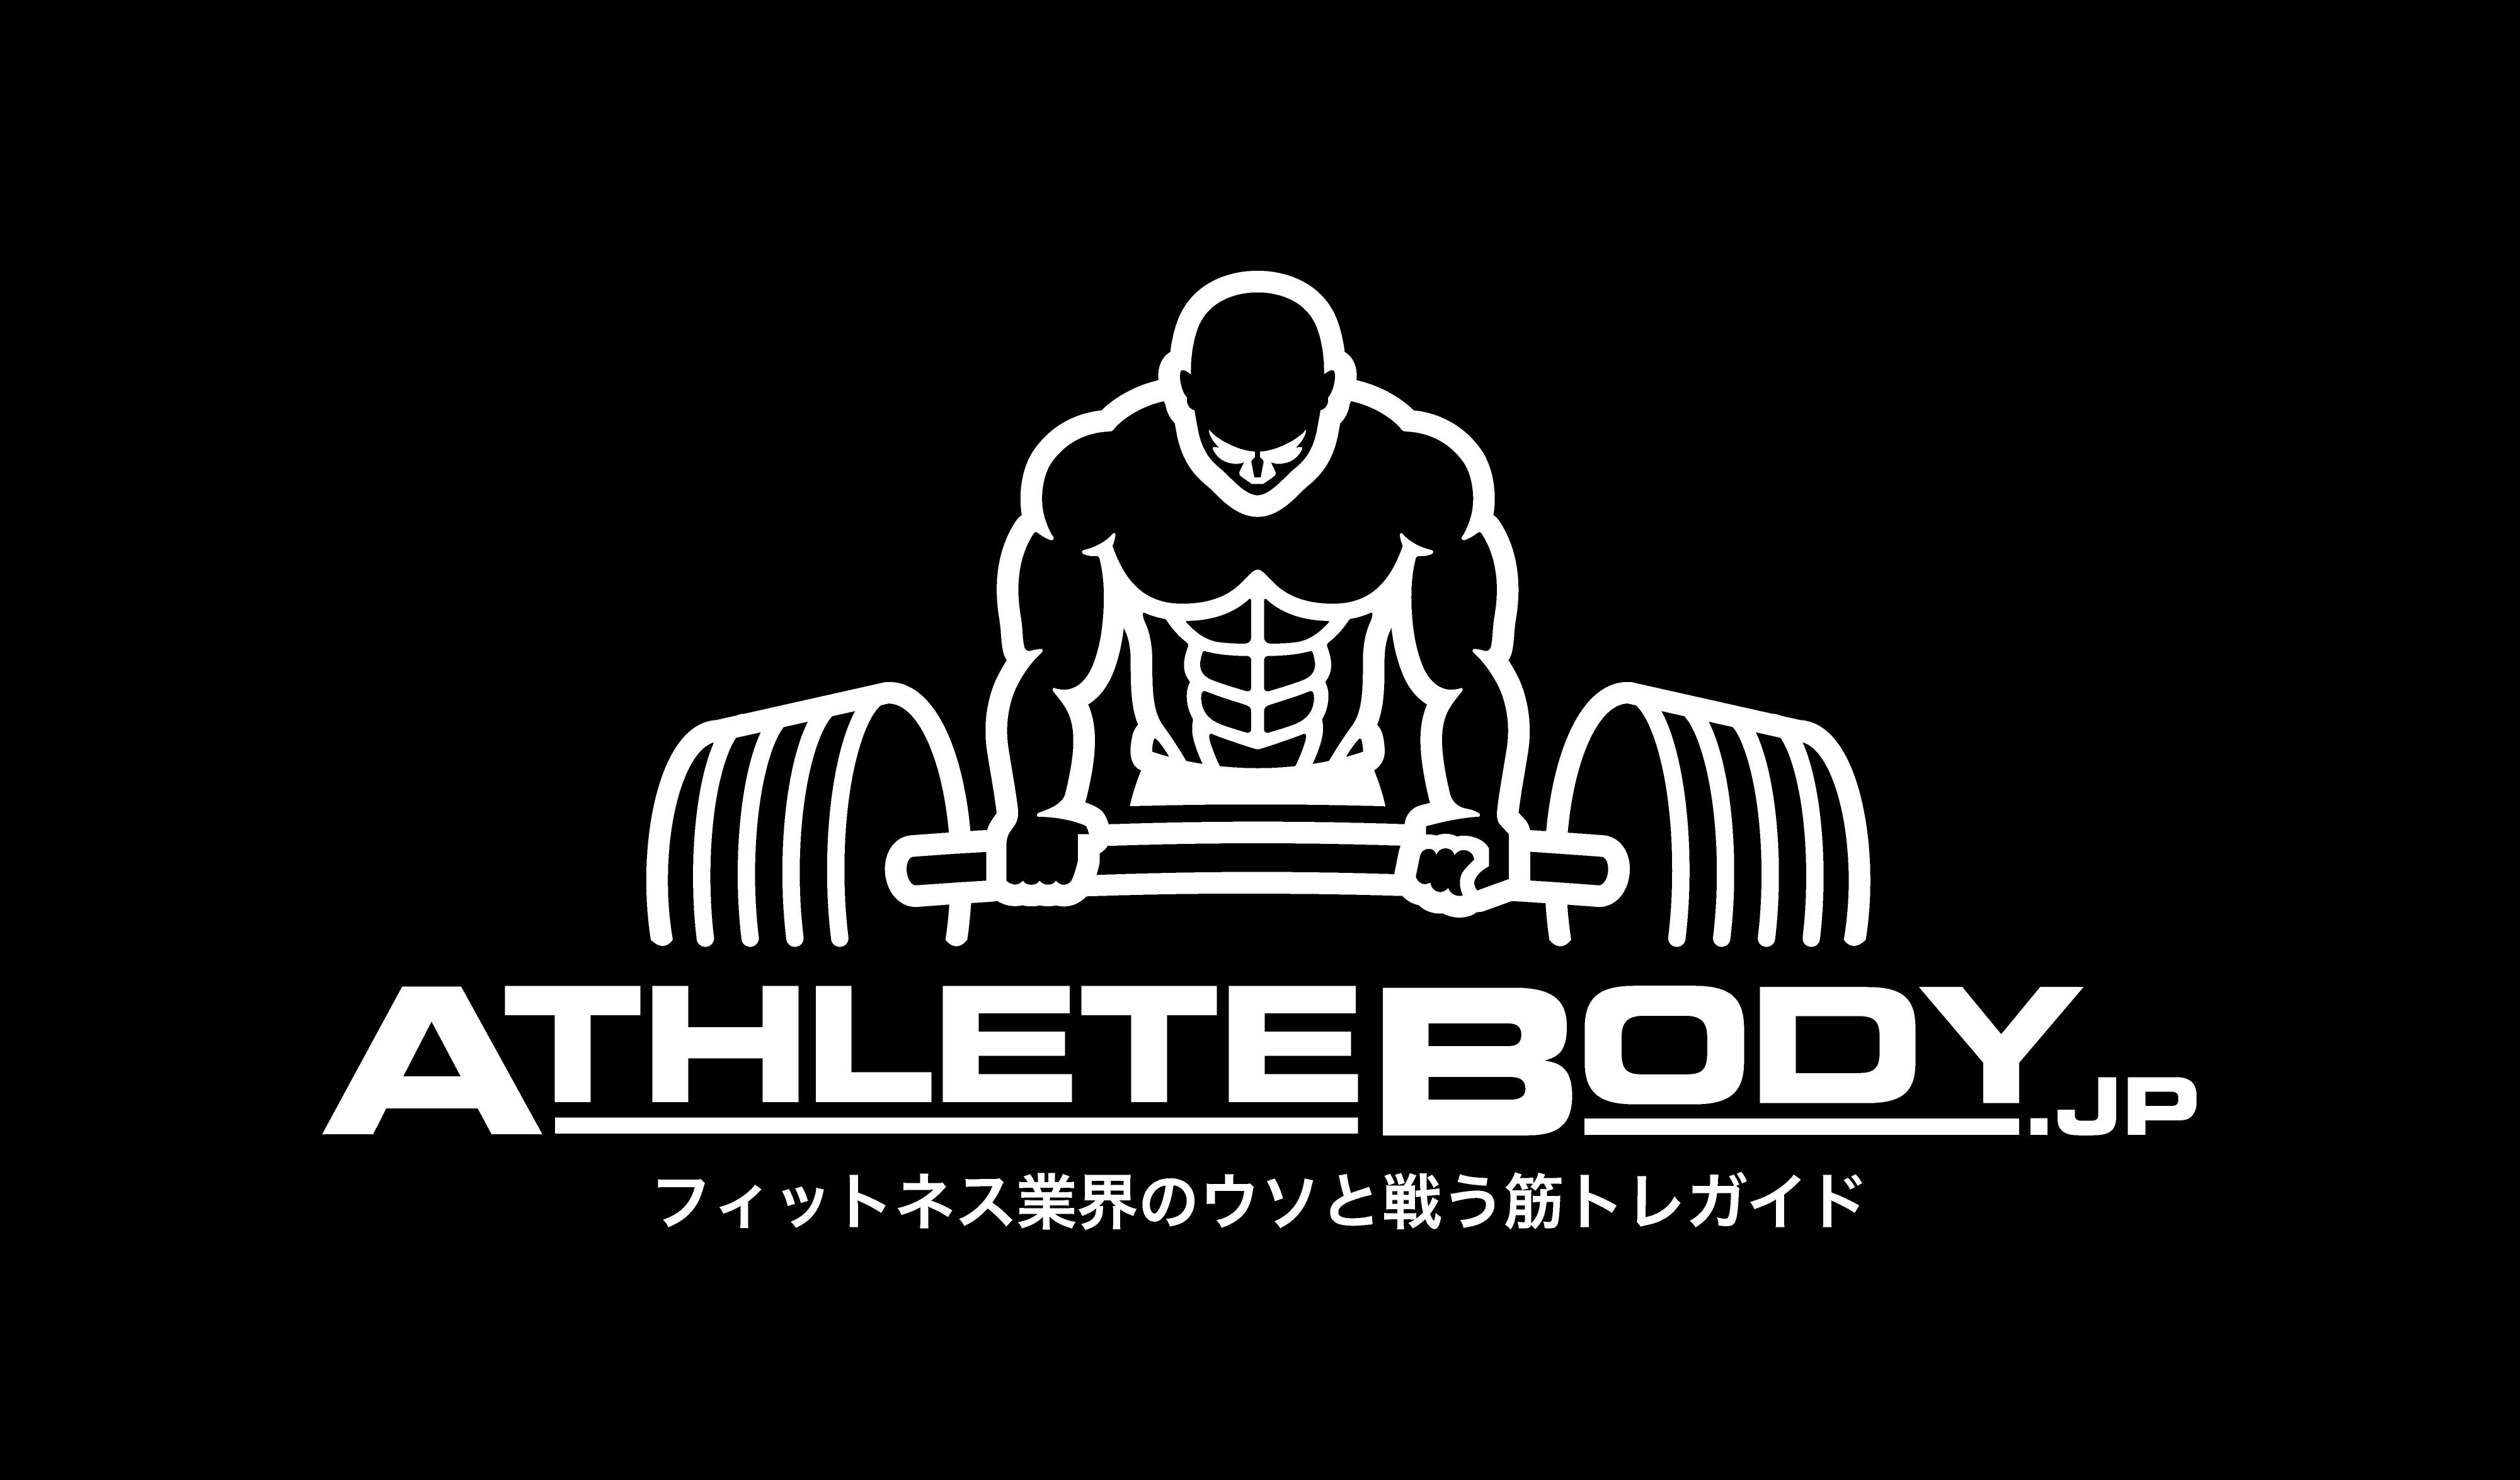 AthleteBody.jp